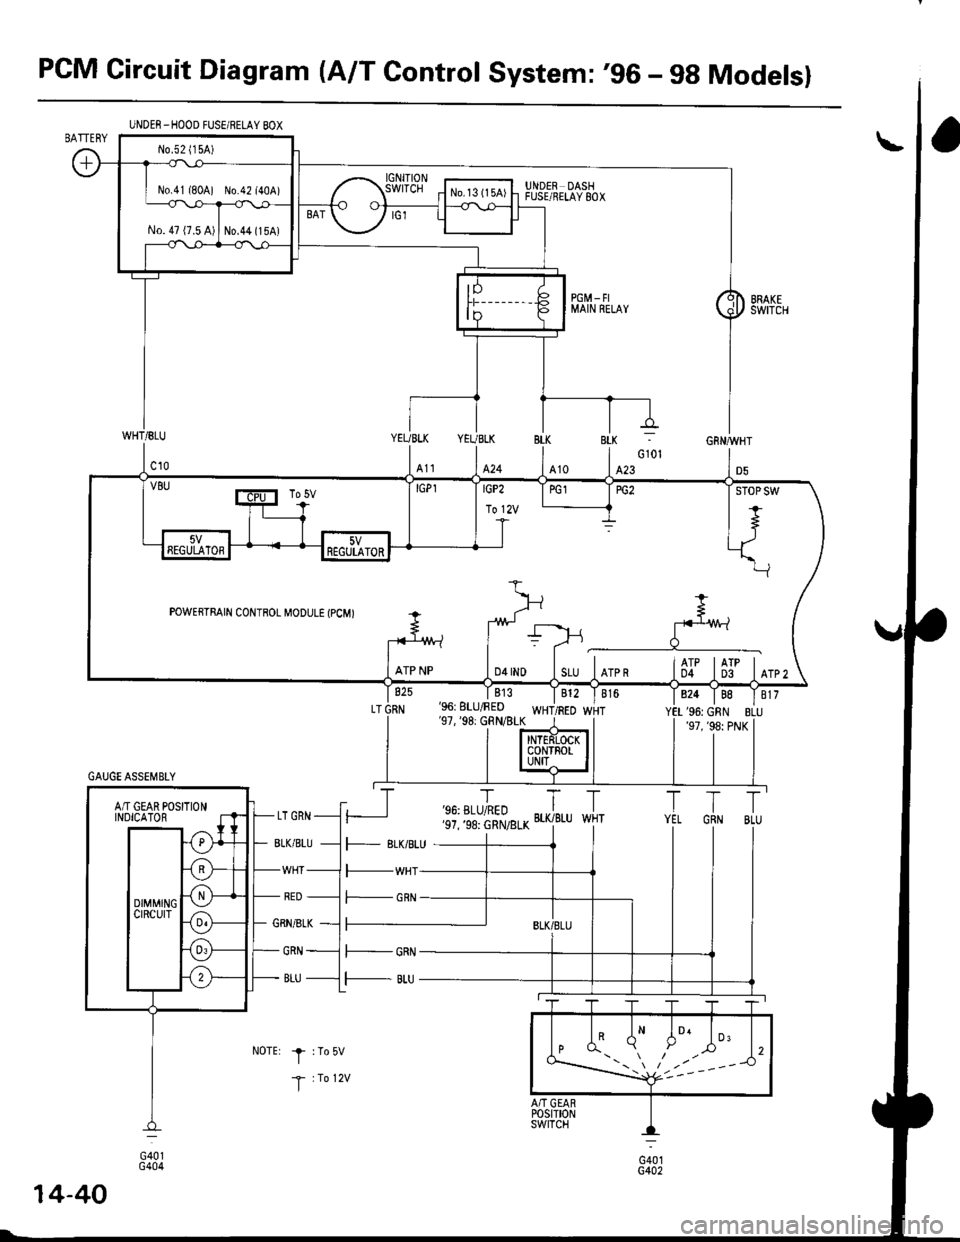 HONDA CIVIC 1996 6.G Owners Manual PGM Gircuit Diagram (A/T Control System: 96 - 98 Modelsl
UNDEfl -HOOD FUSE/RELAY BOX
No.41 (80A1 N0.42 l40A)
No.47 {7.5 A)
No.l3 (15A)
Arp Np lon,^o l r,, lotrr l 6lt l 3]t lot*
UNDER DASHFUSE/REIAY 